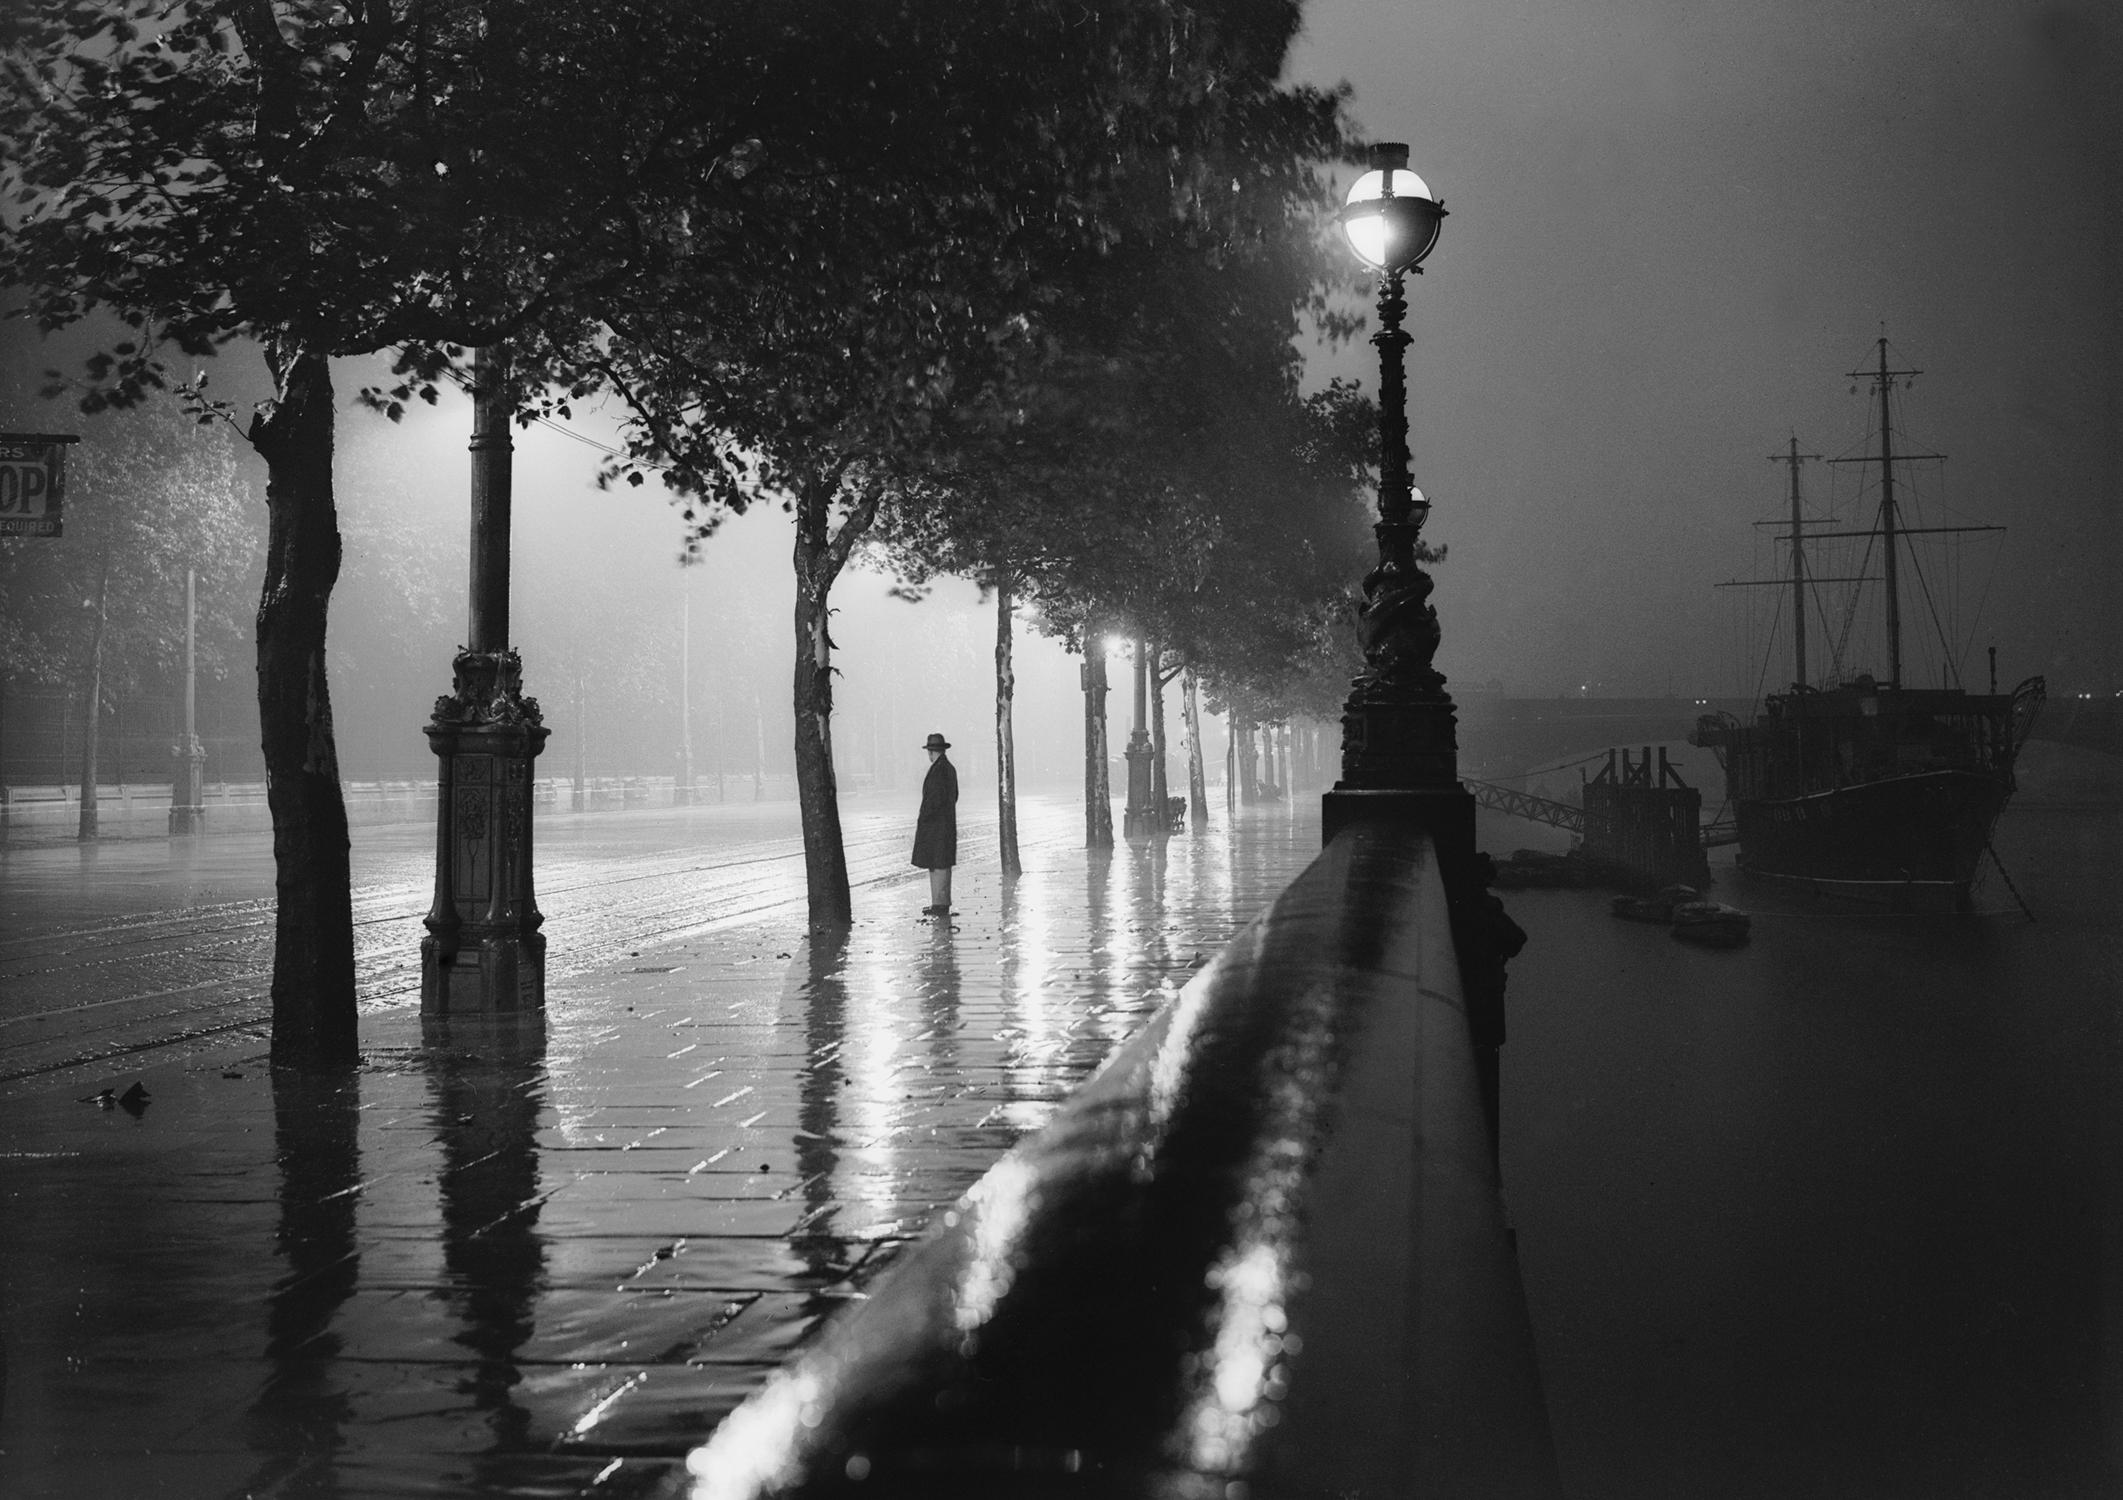 Unknown Figurative Photograph - 'Rainy Embankment' London (Limited Edition) Oversize